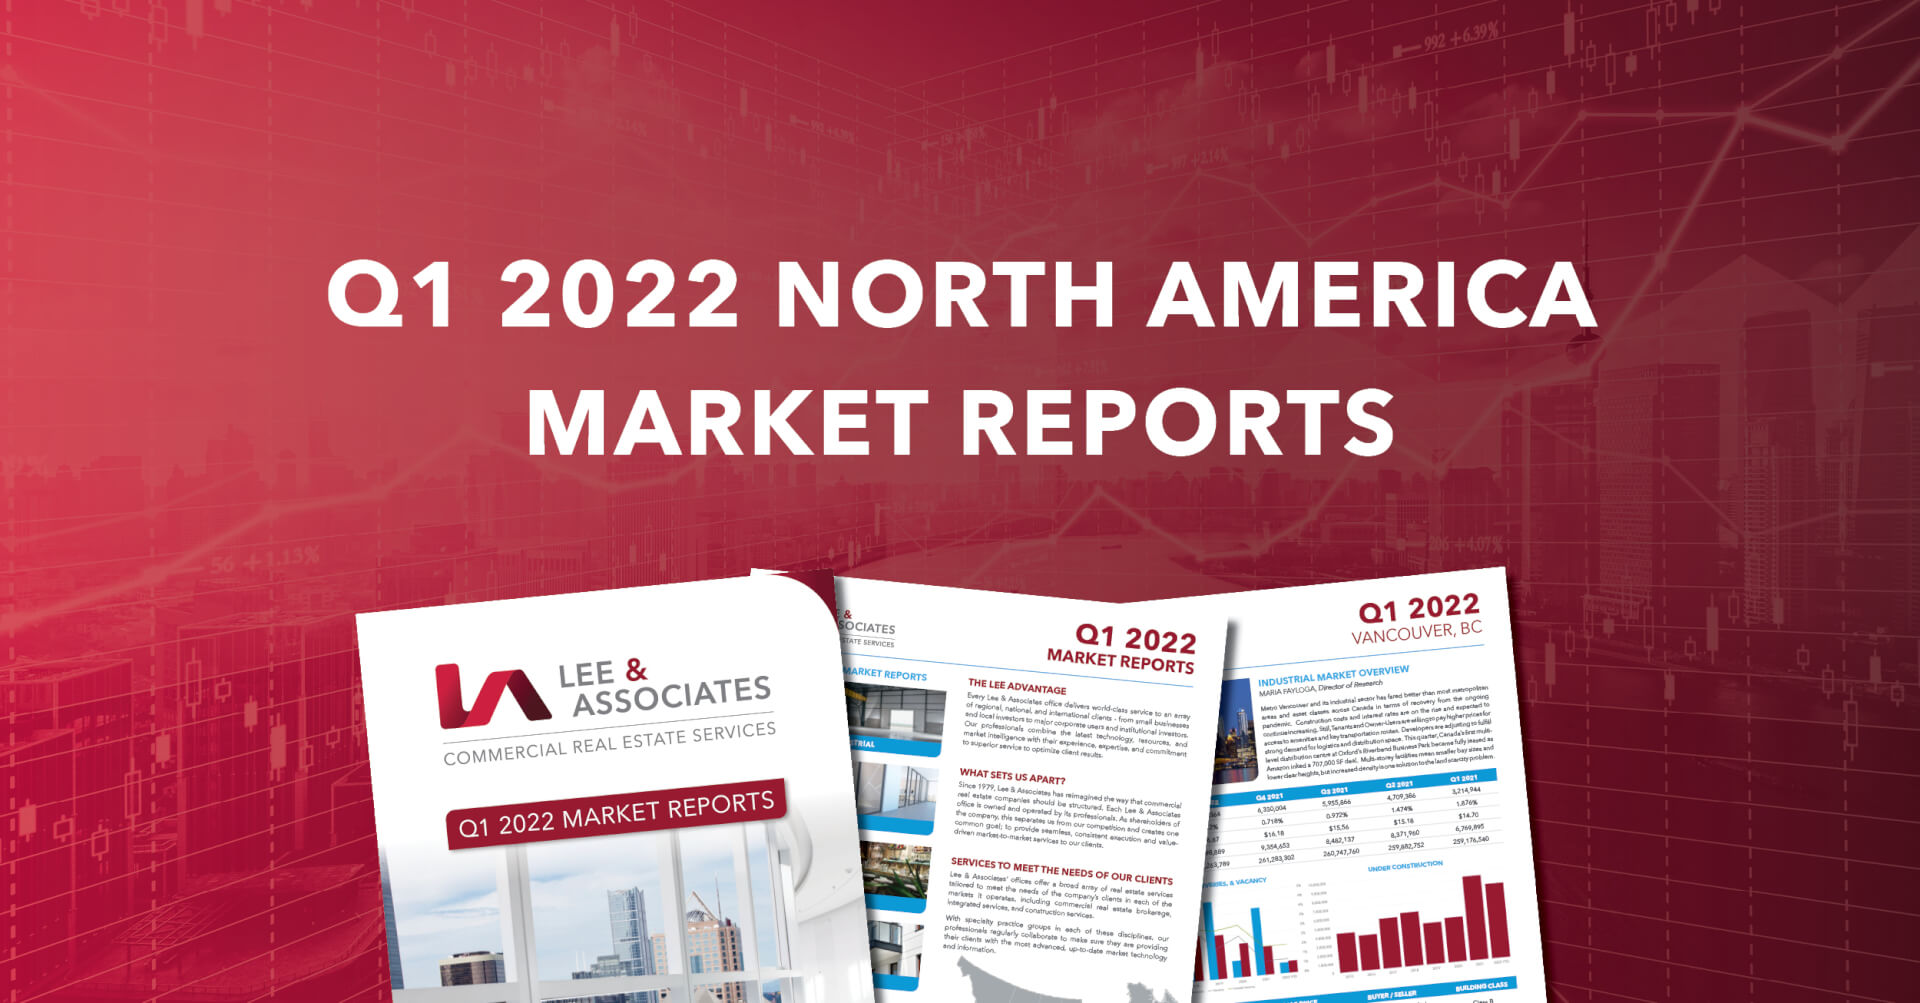 Q1 2022 North America Market Reports Released